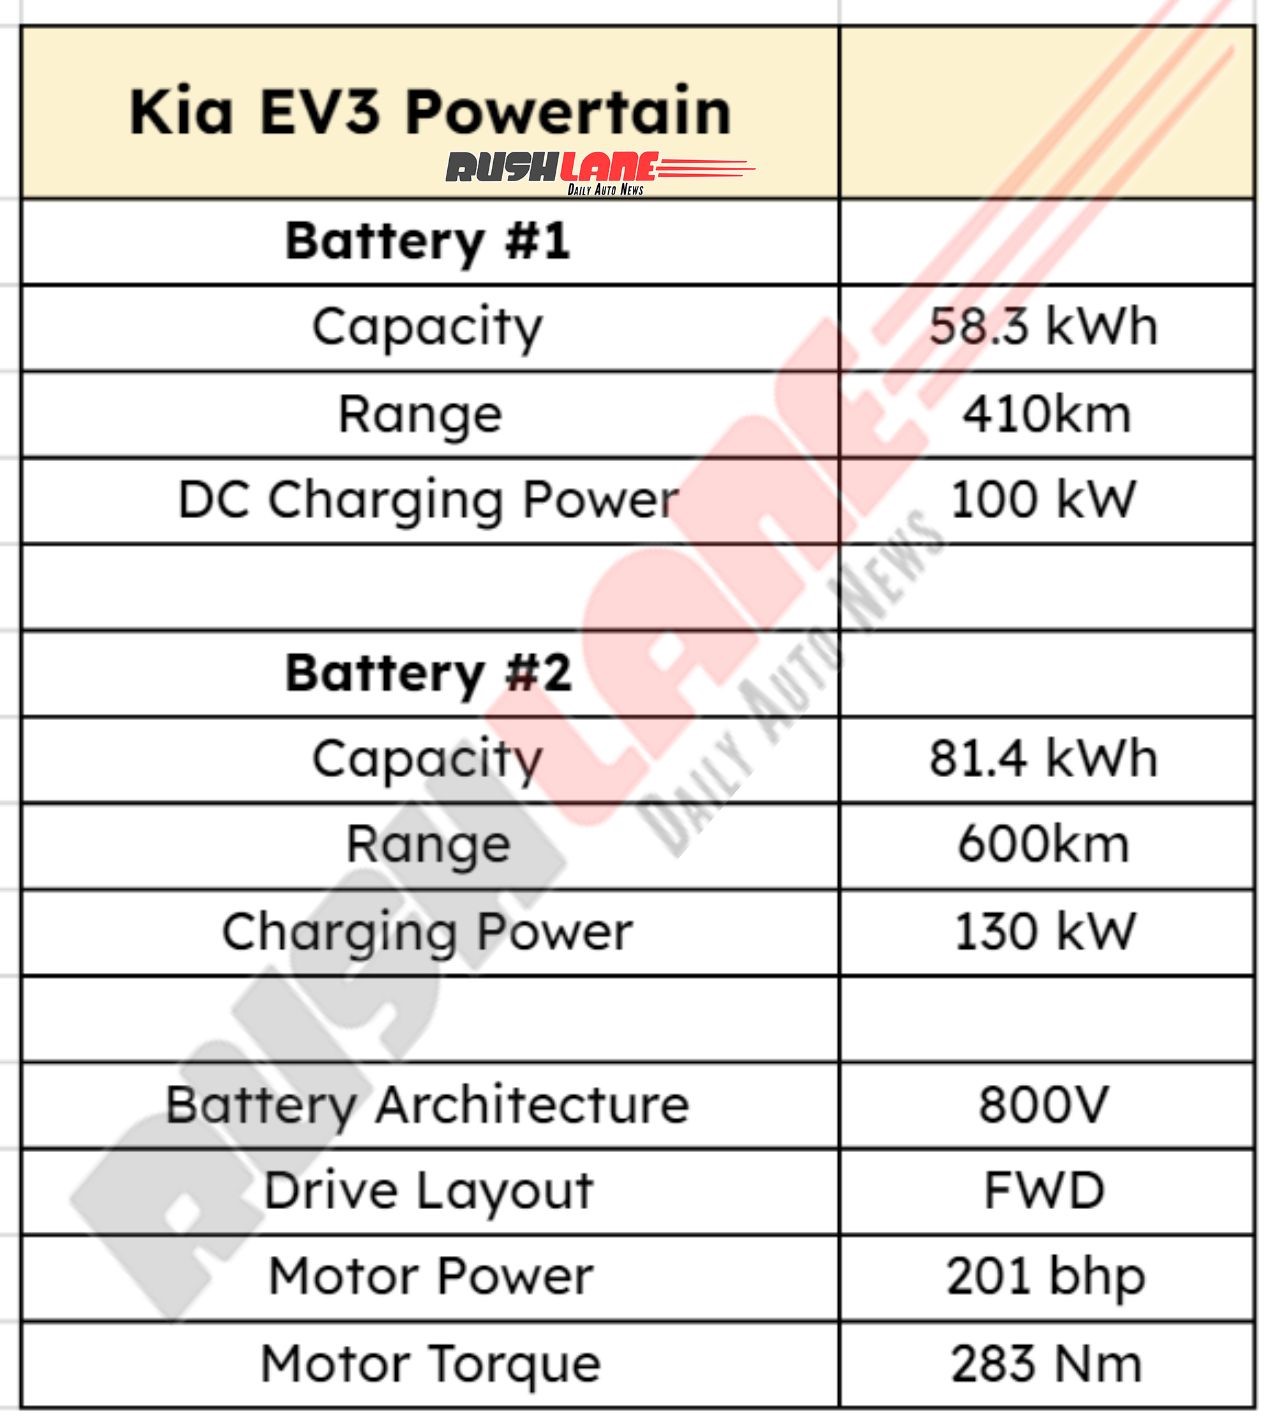 Kia EV3 Powertrain, Battery, Range